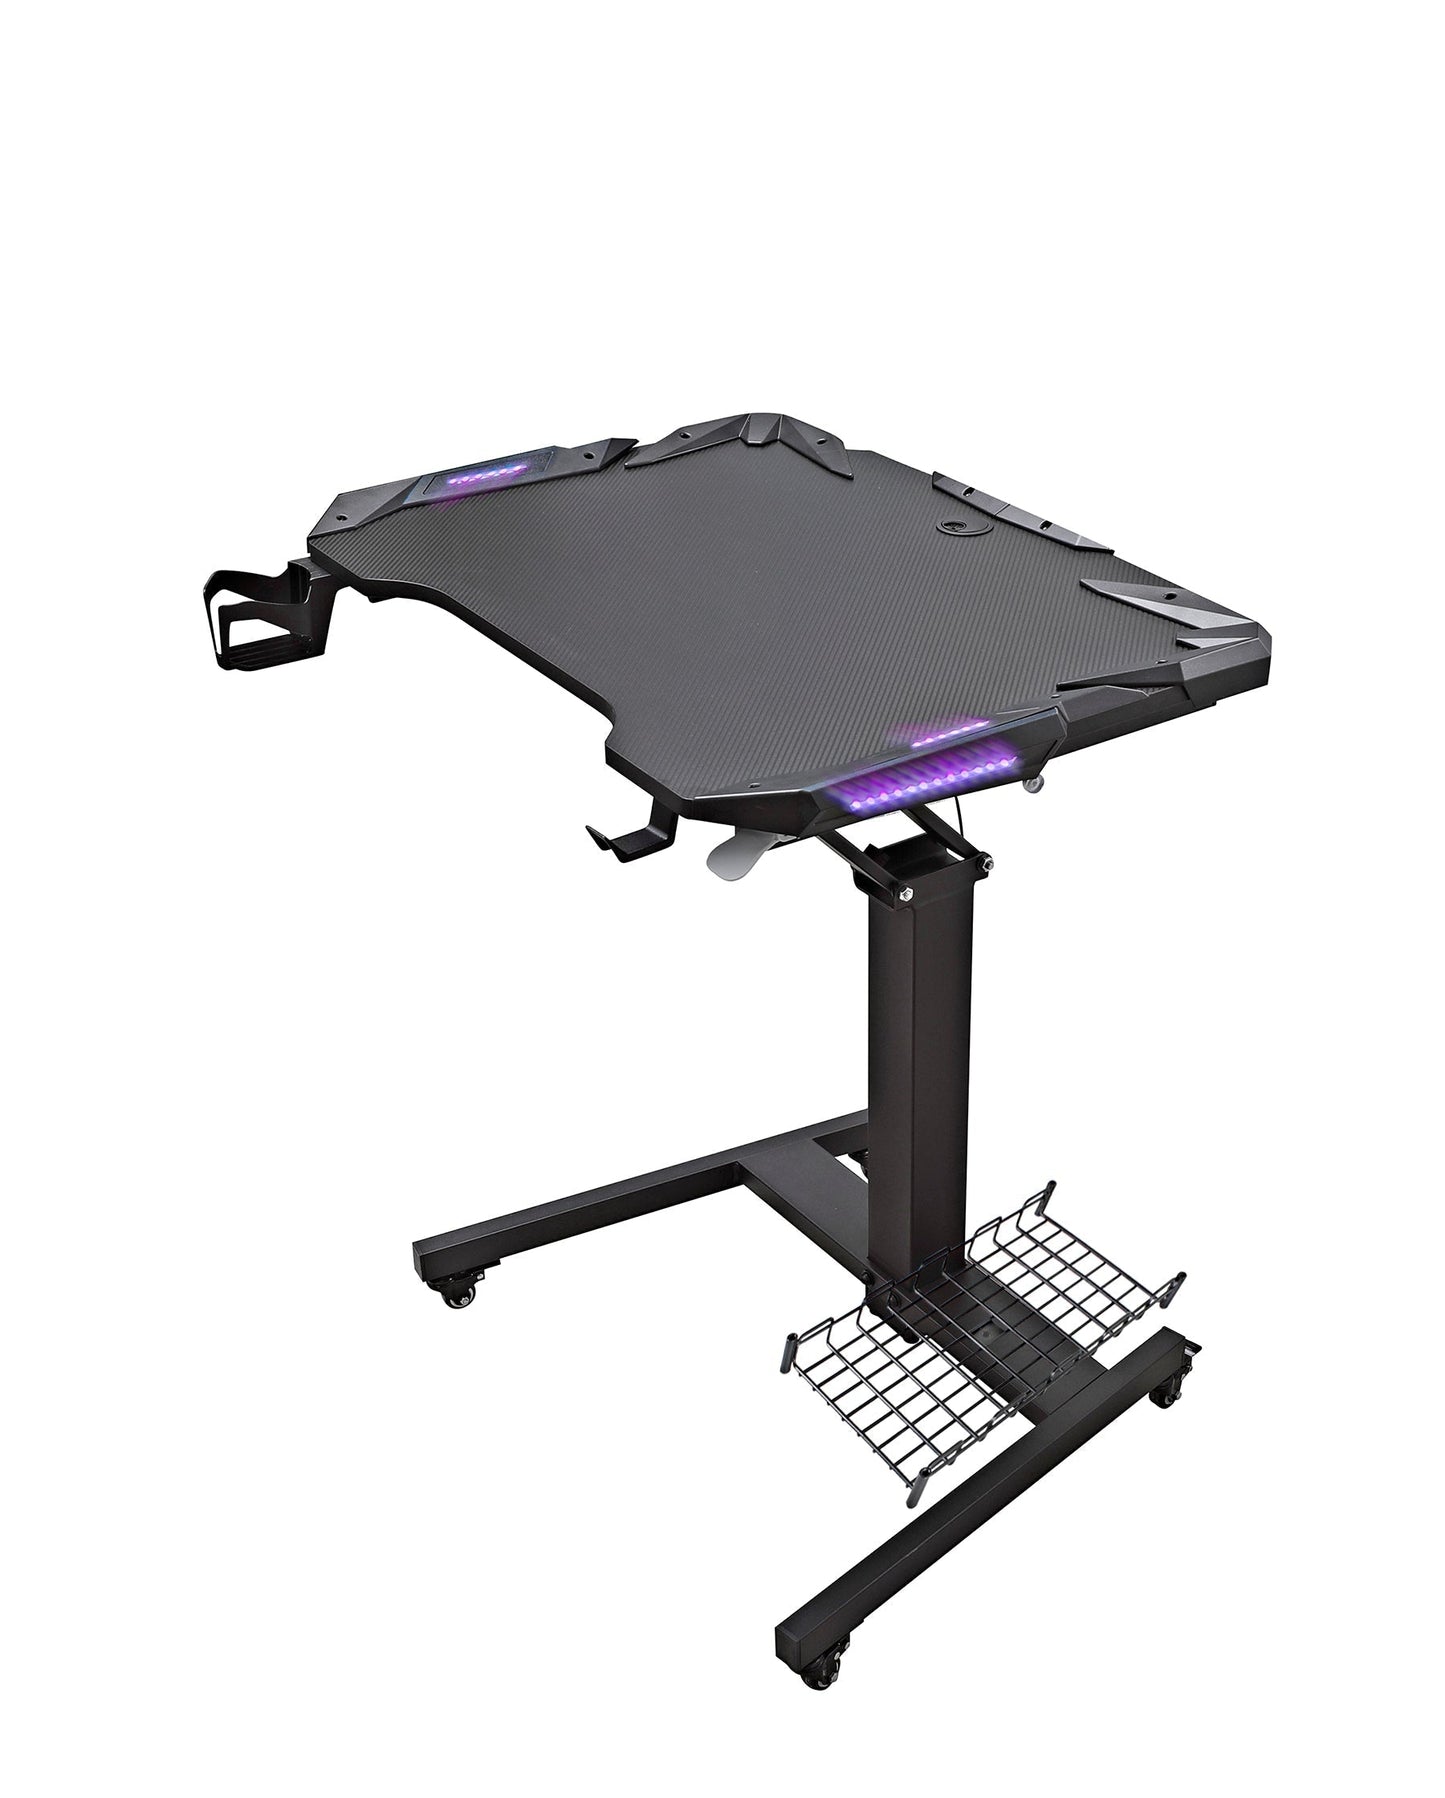 Mobile Standing Game Desk Height Adjustable Pneumatic Adjustable, Workstation, Study Desk Black with Light+Computer Tower Stand